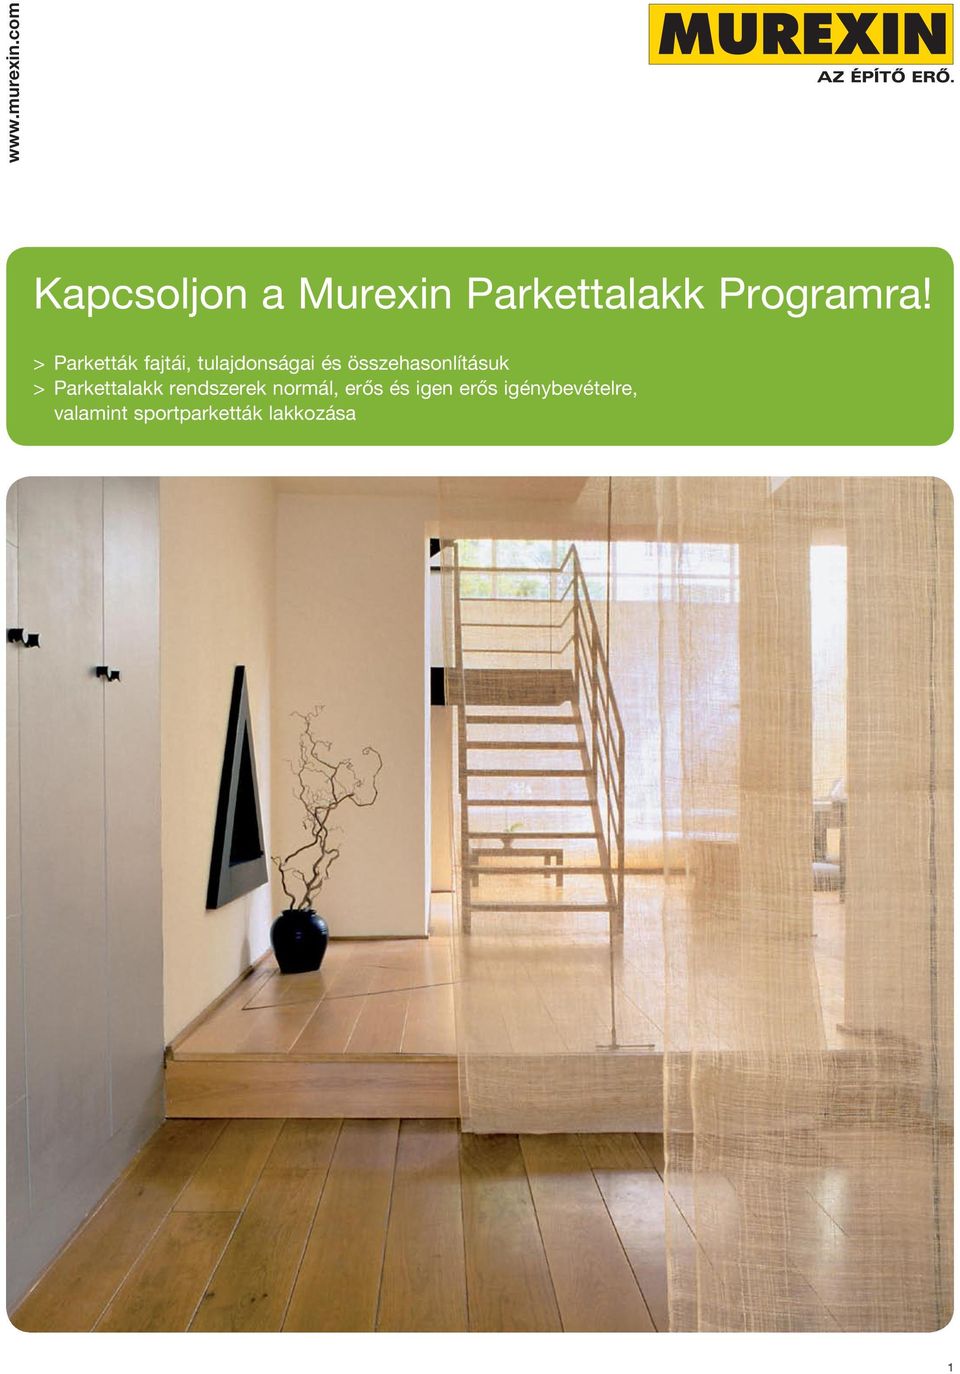 Kapcsoljon a Murexin Parkettalakk Programra! - PDF Free Download